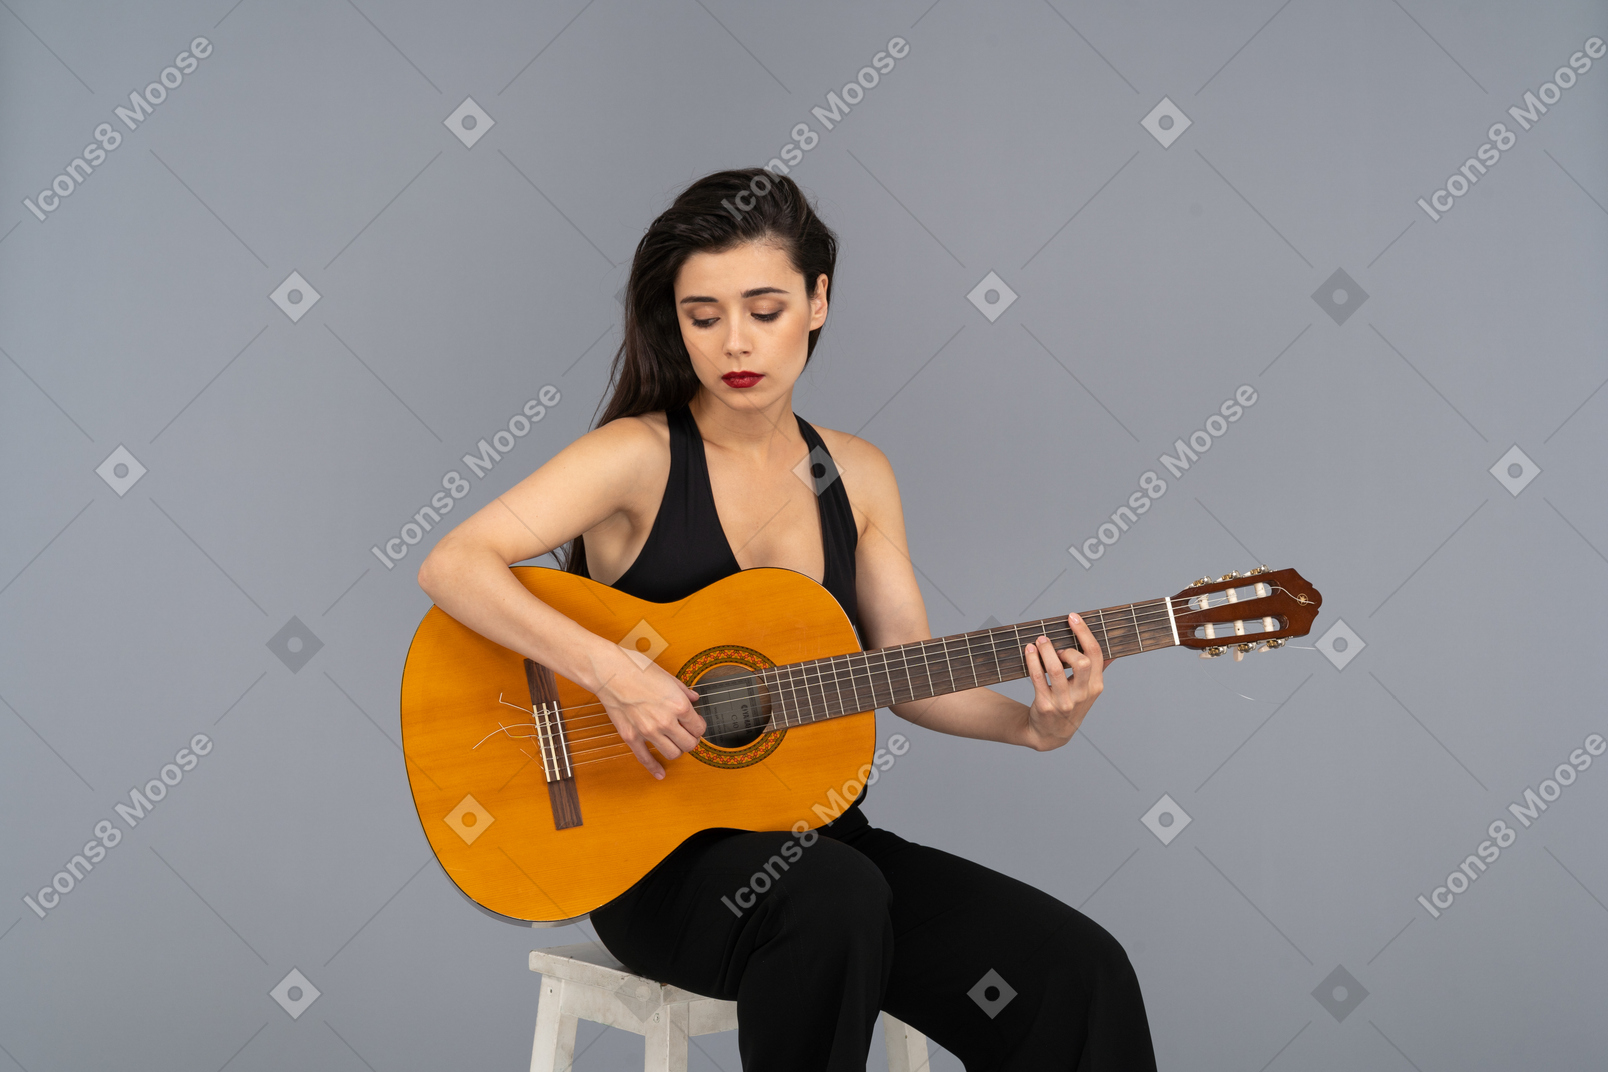 Vista frontal de una joven sentada en traje negro tocando la guitarra